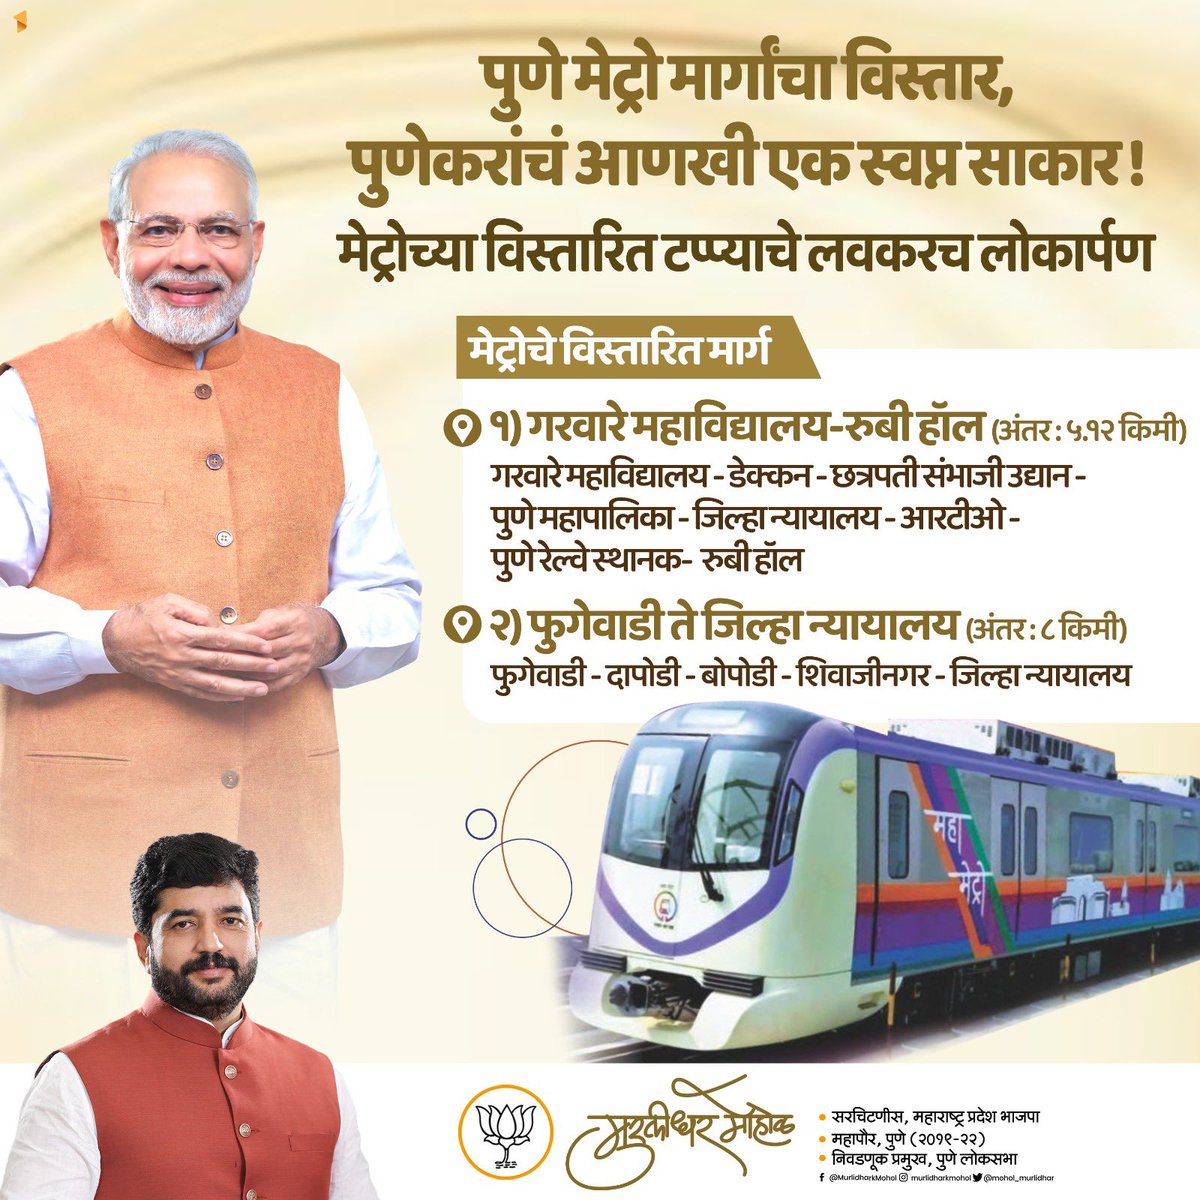 पुणे मेट्रो मार्गांचा विस्तार; पुणेकरांचं आणखी एक स्वप्न साकार !

#BJP4Pune #BJP4PMC #Pune #पुणे #Metro #मेट्रो

@narendramodi 
@Dev_Fadnavis 
@cbawankule 
@BJP4Maharashtra